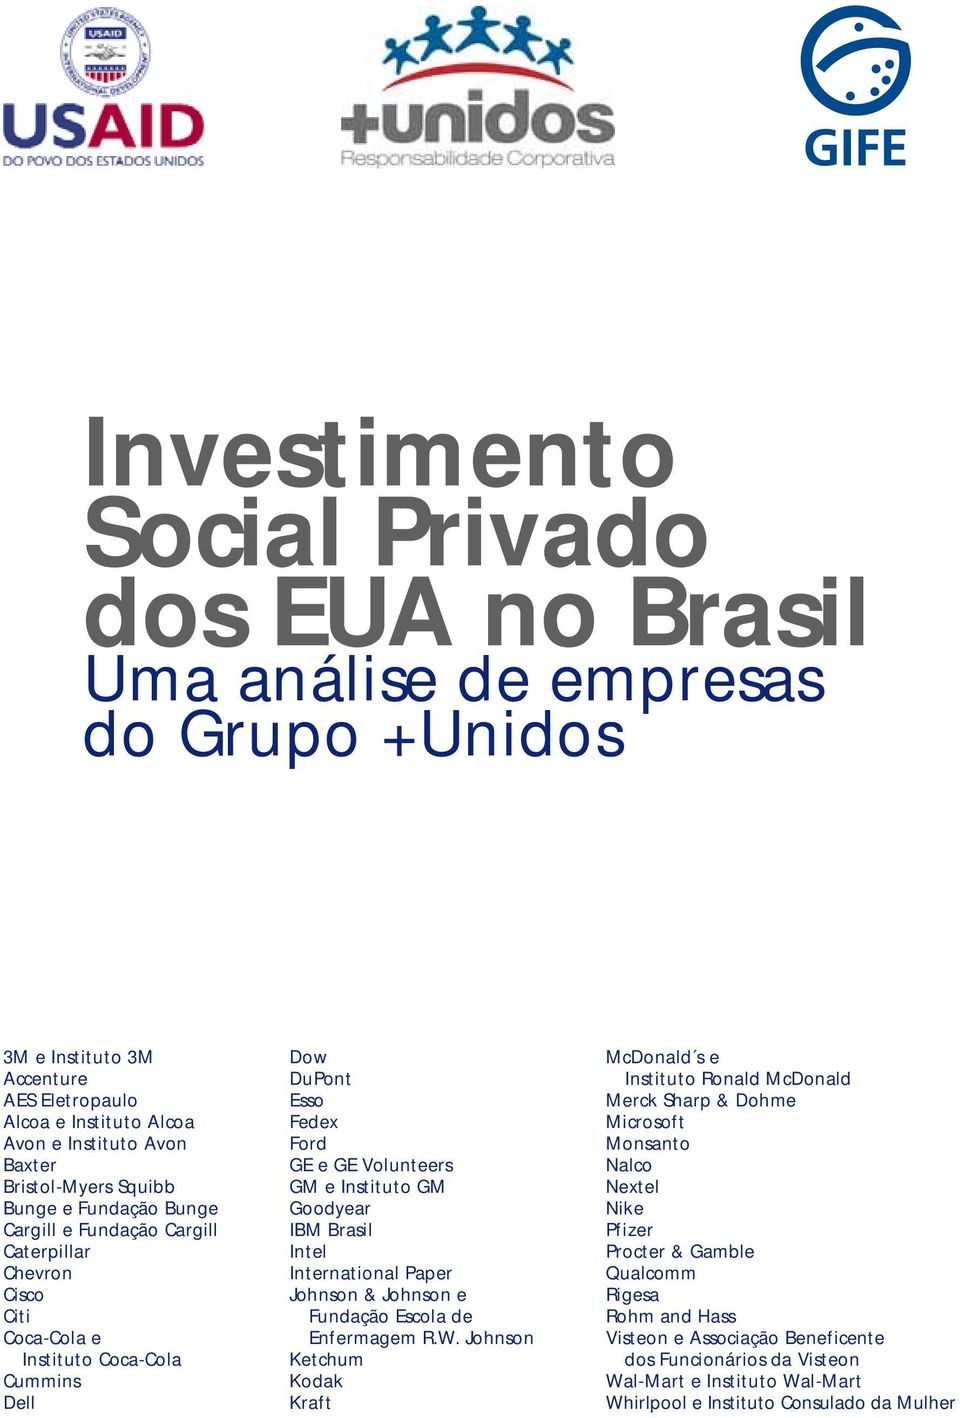 Goodyear IBM Brasil Intel International Paper Johnson & Johnson e Fundação Escola de Enfermagem R.W.